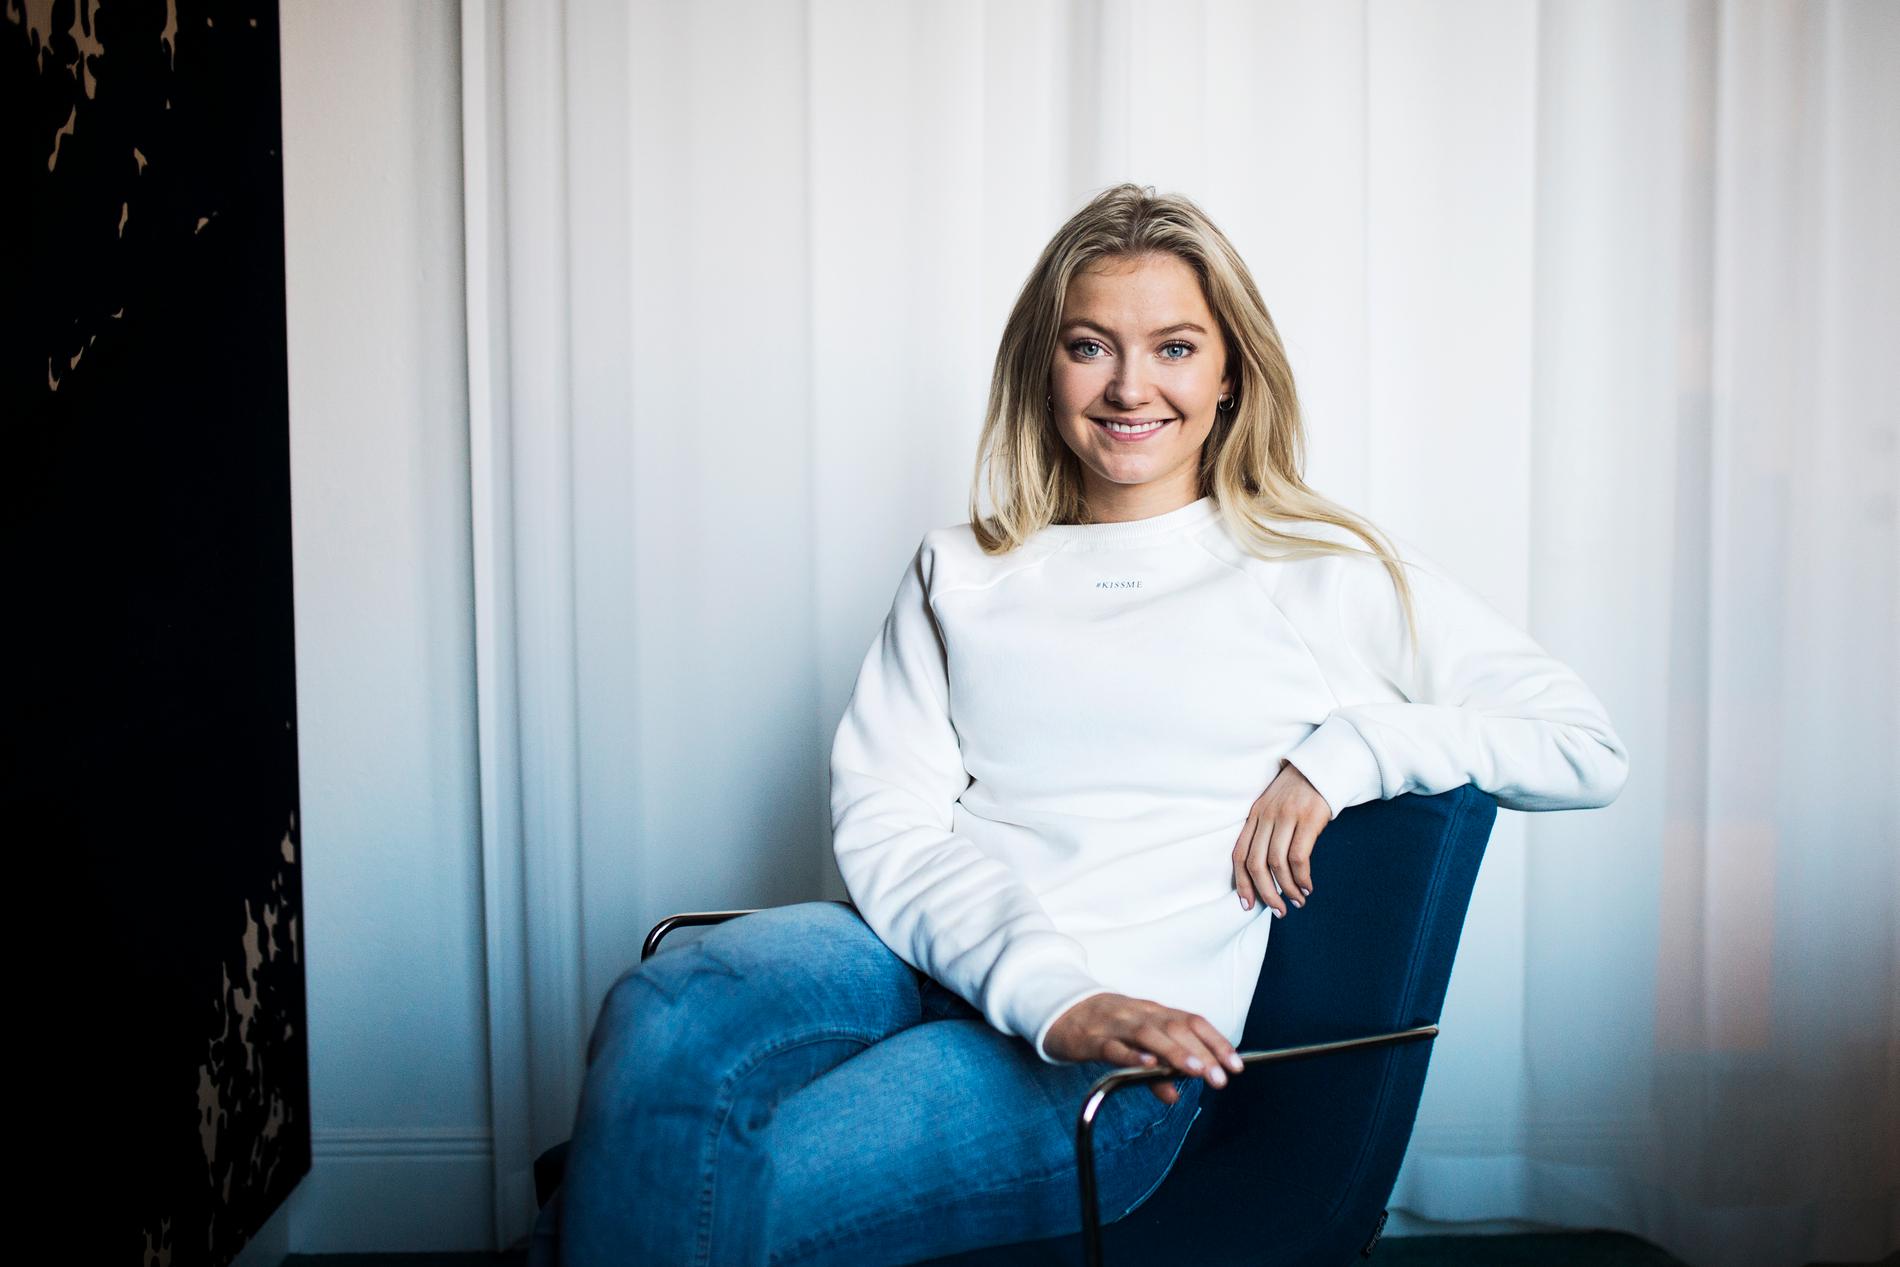 2017. Astrid S i en intervju med Aftonbladet.